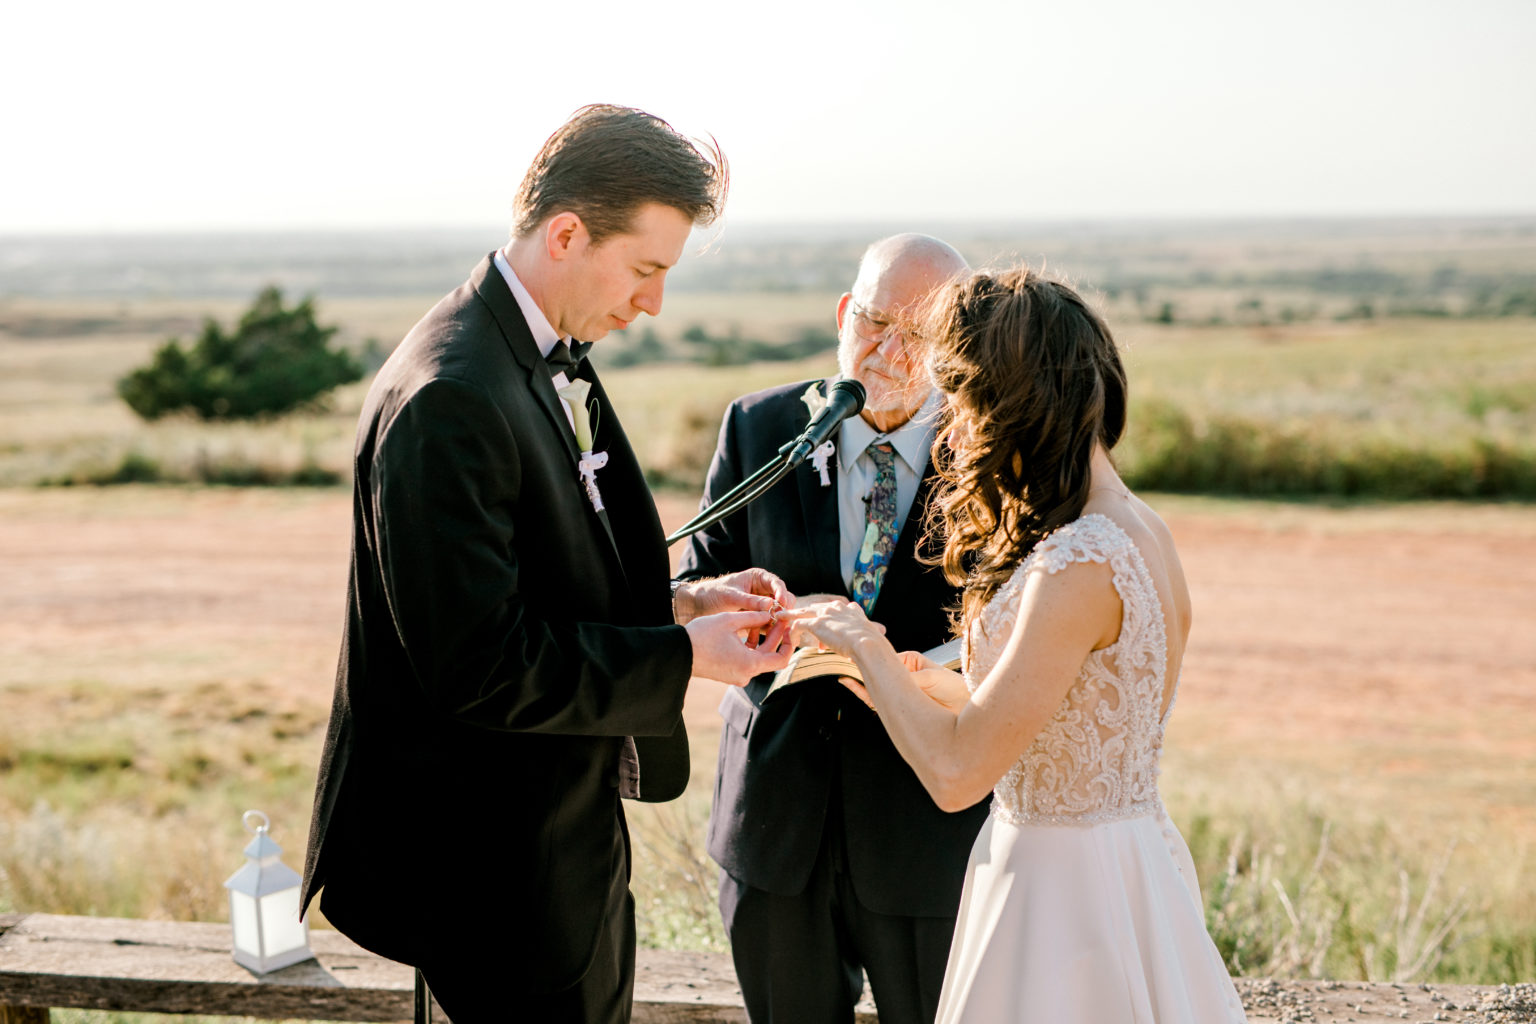 Jeff + Jill | Western Oklahoma Surprise Wedding | LaurenBeauPhoto